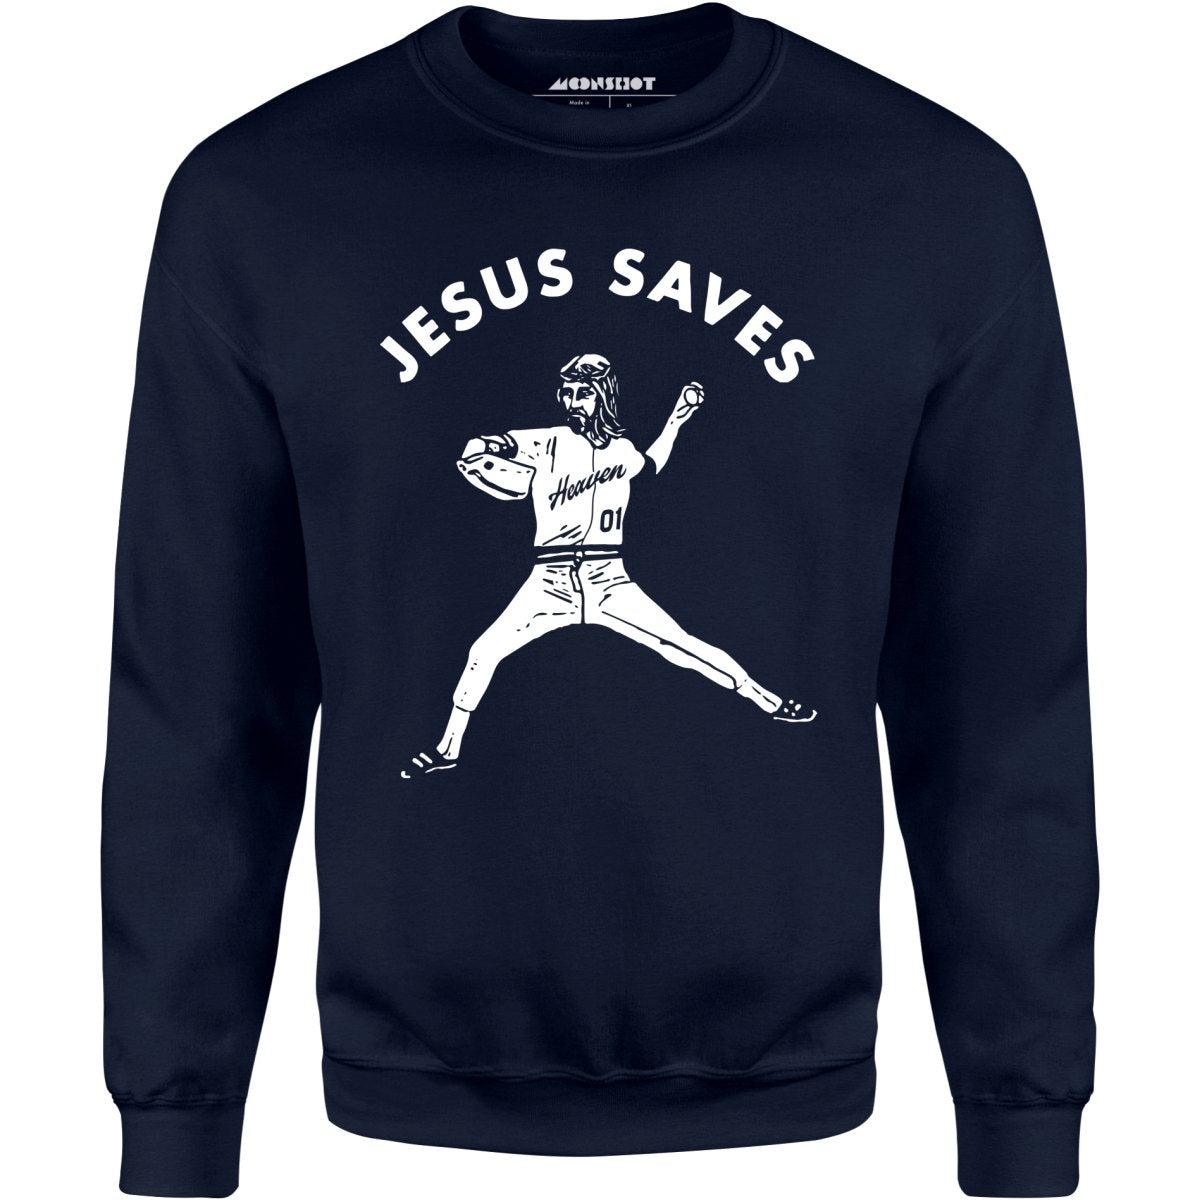 Jesus Saves - Lefty - Unisex Sweatshirt